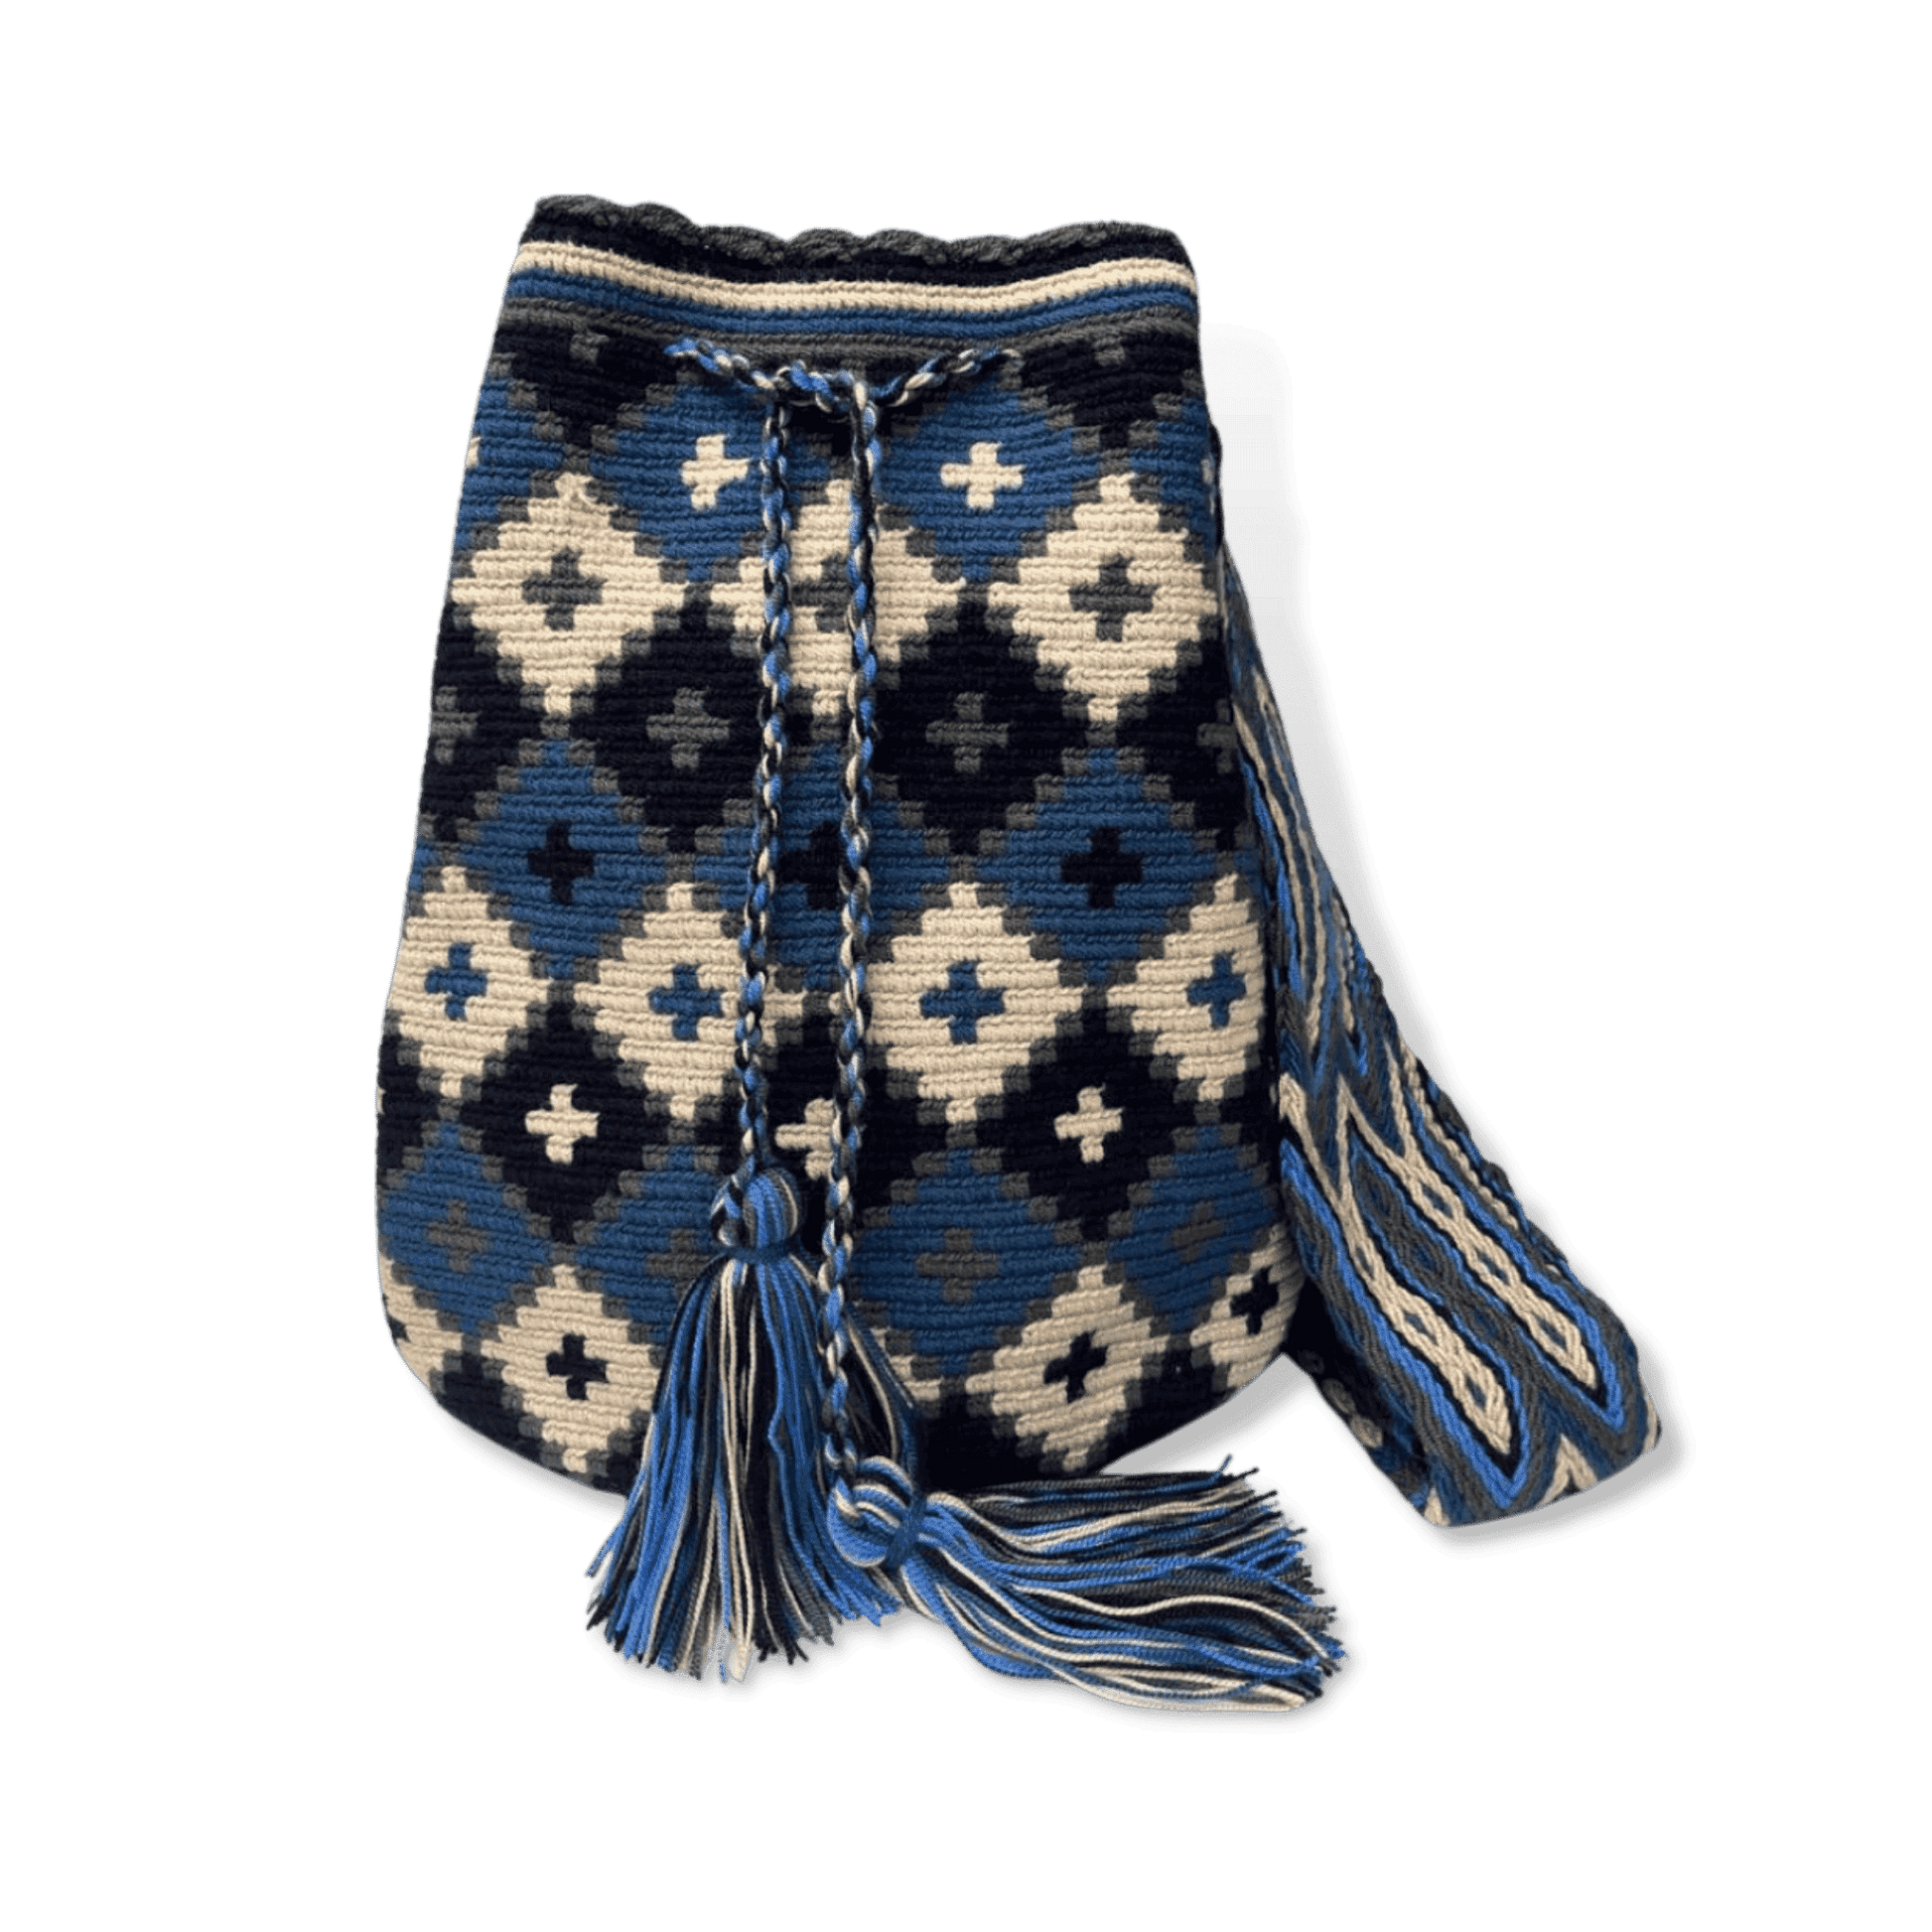 Mochila Wayúu para mujeres diseño rombos y cruces azules y beige